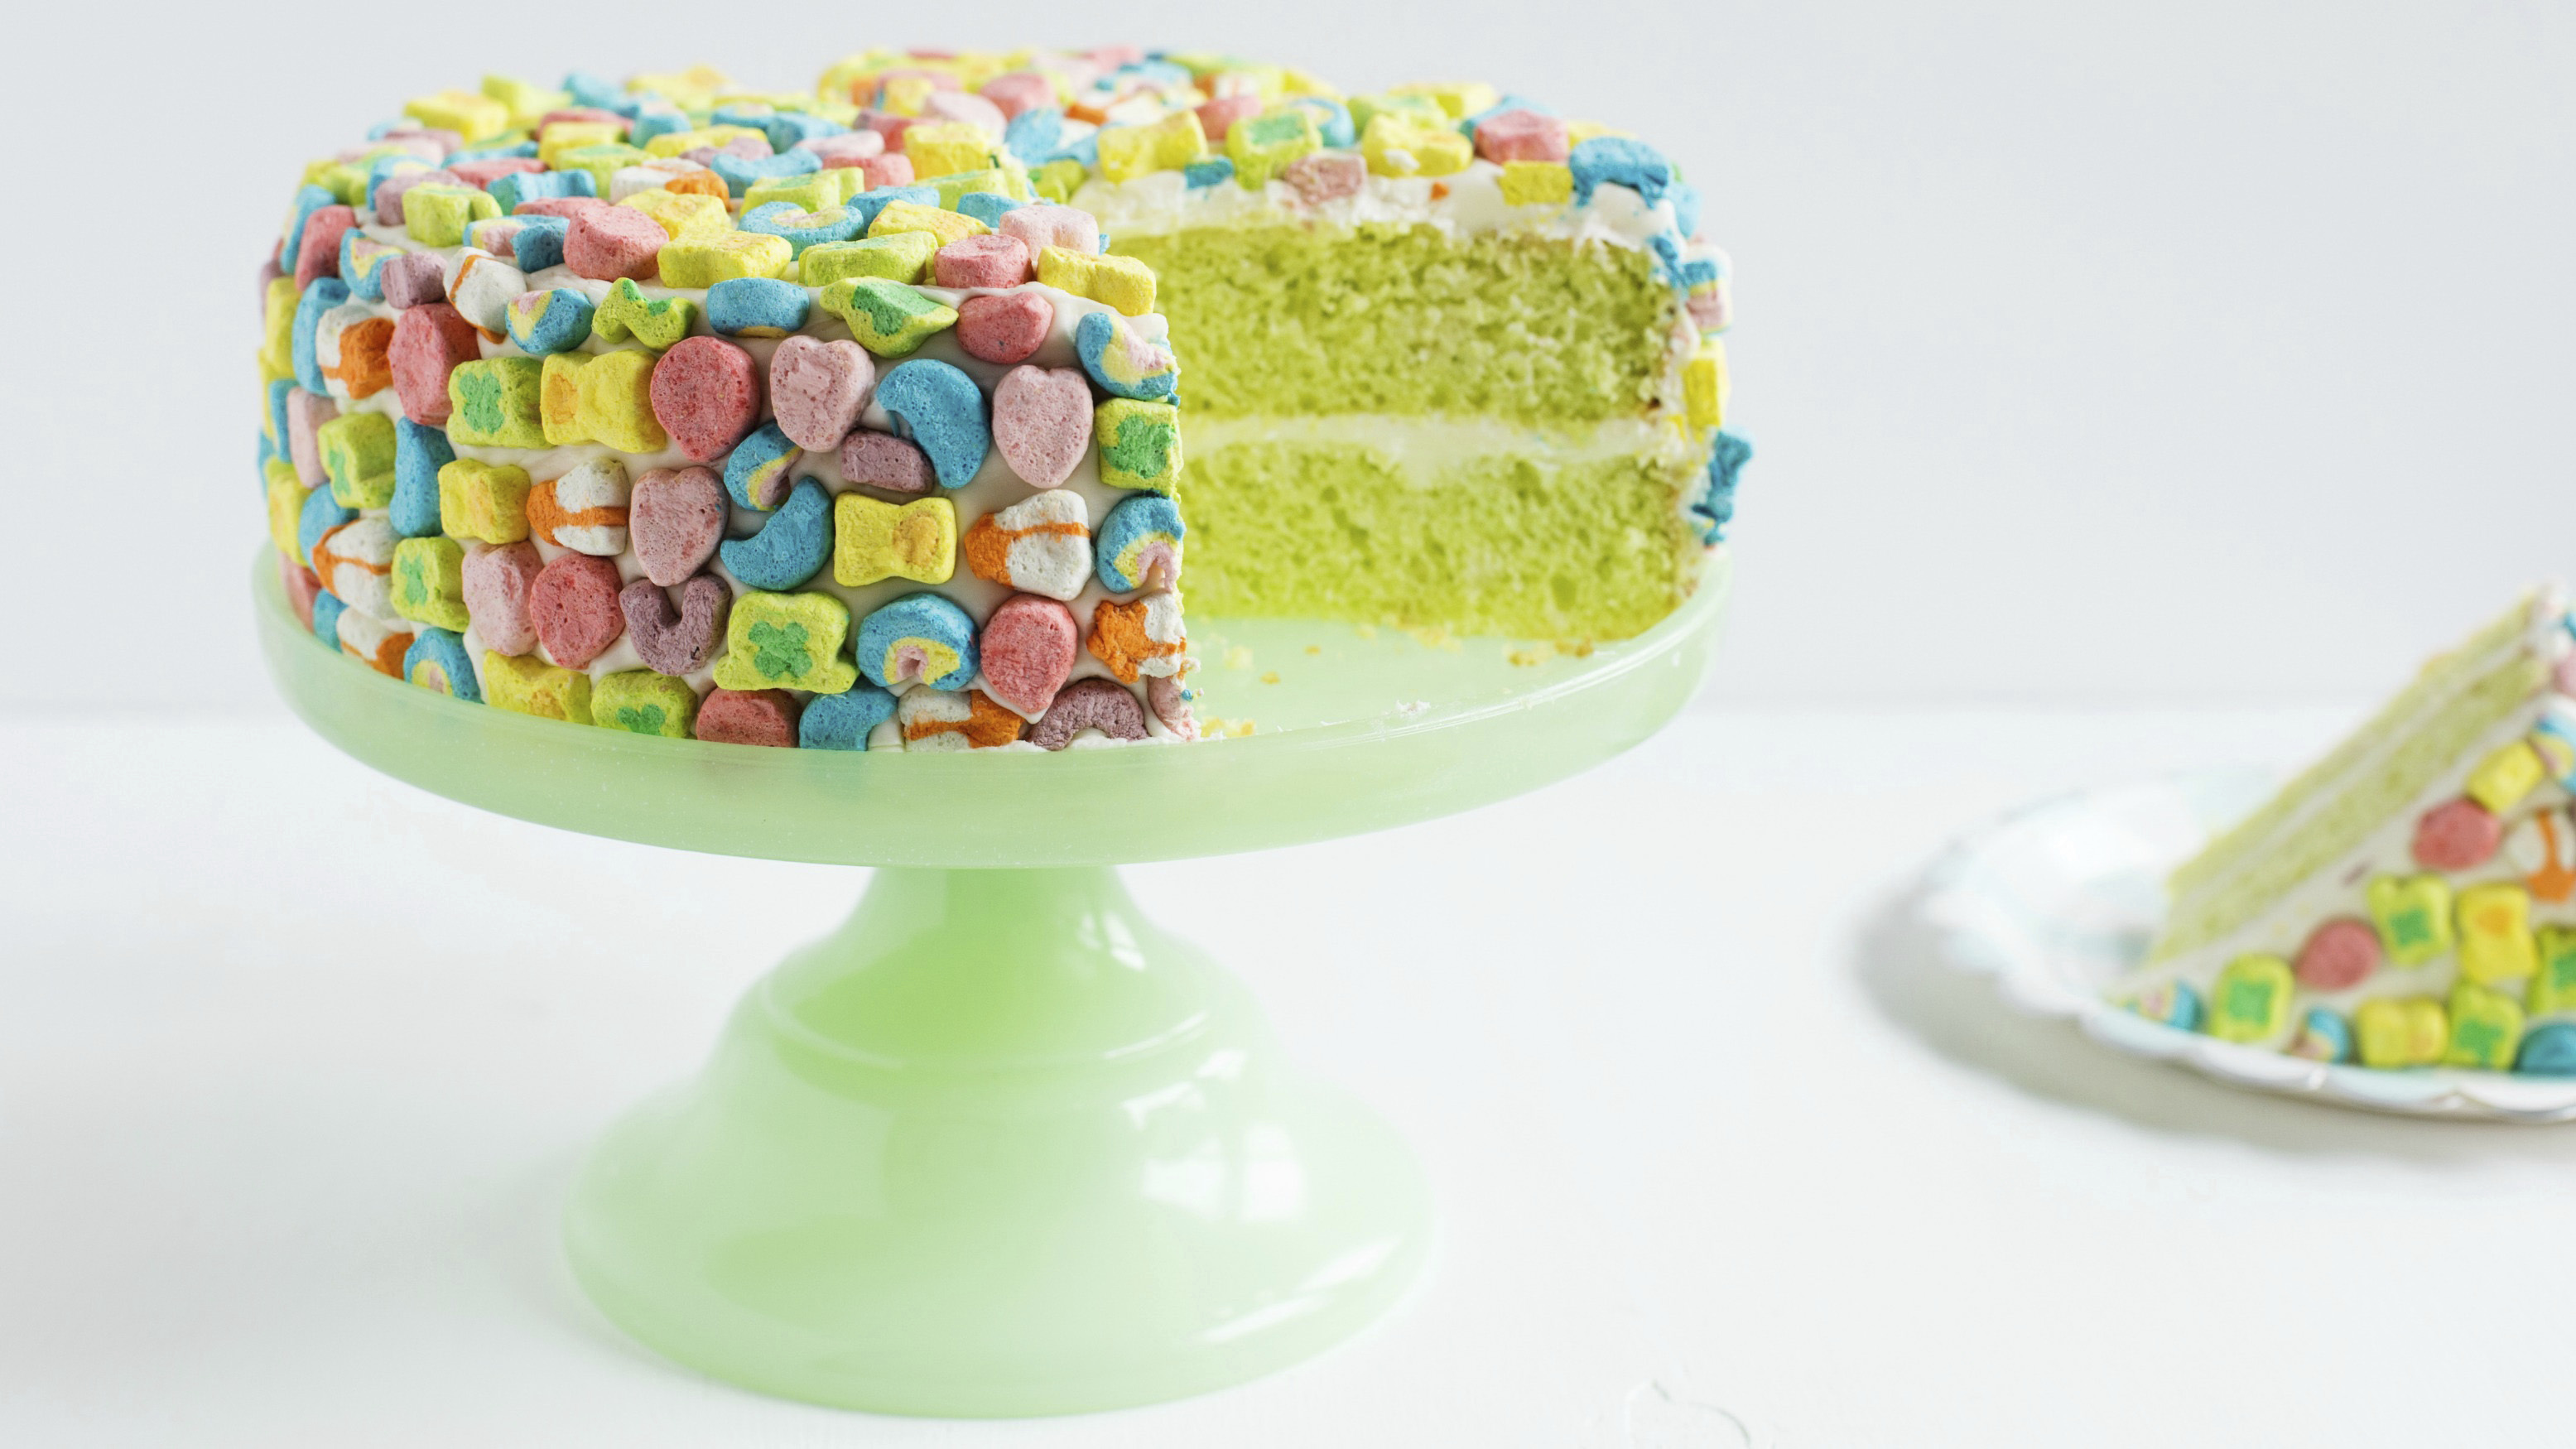 15 chicks pack-Party Cake Flavored Marshmallow Peeps-Novelty Birthday Cake...  | eBay